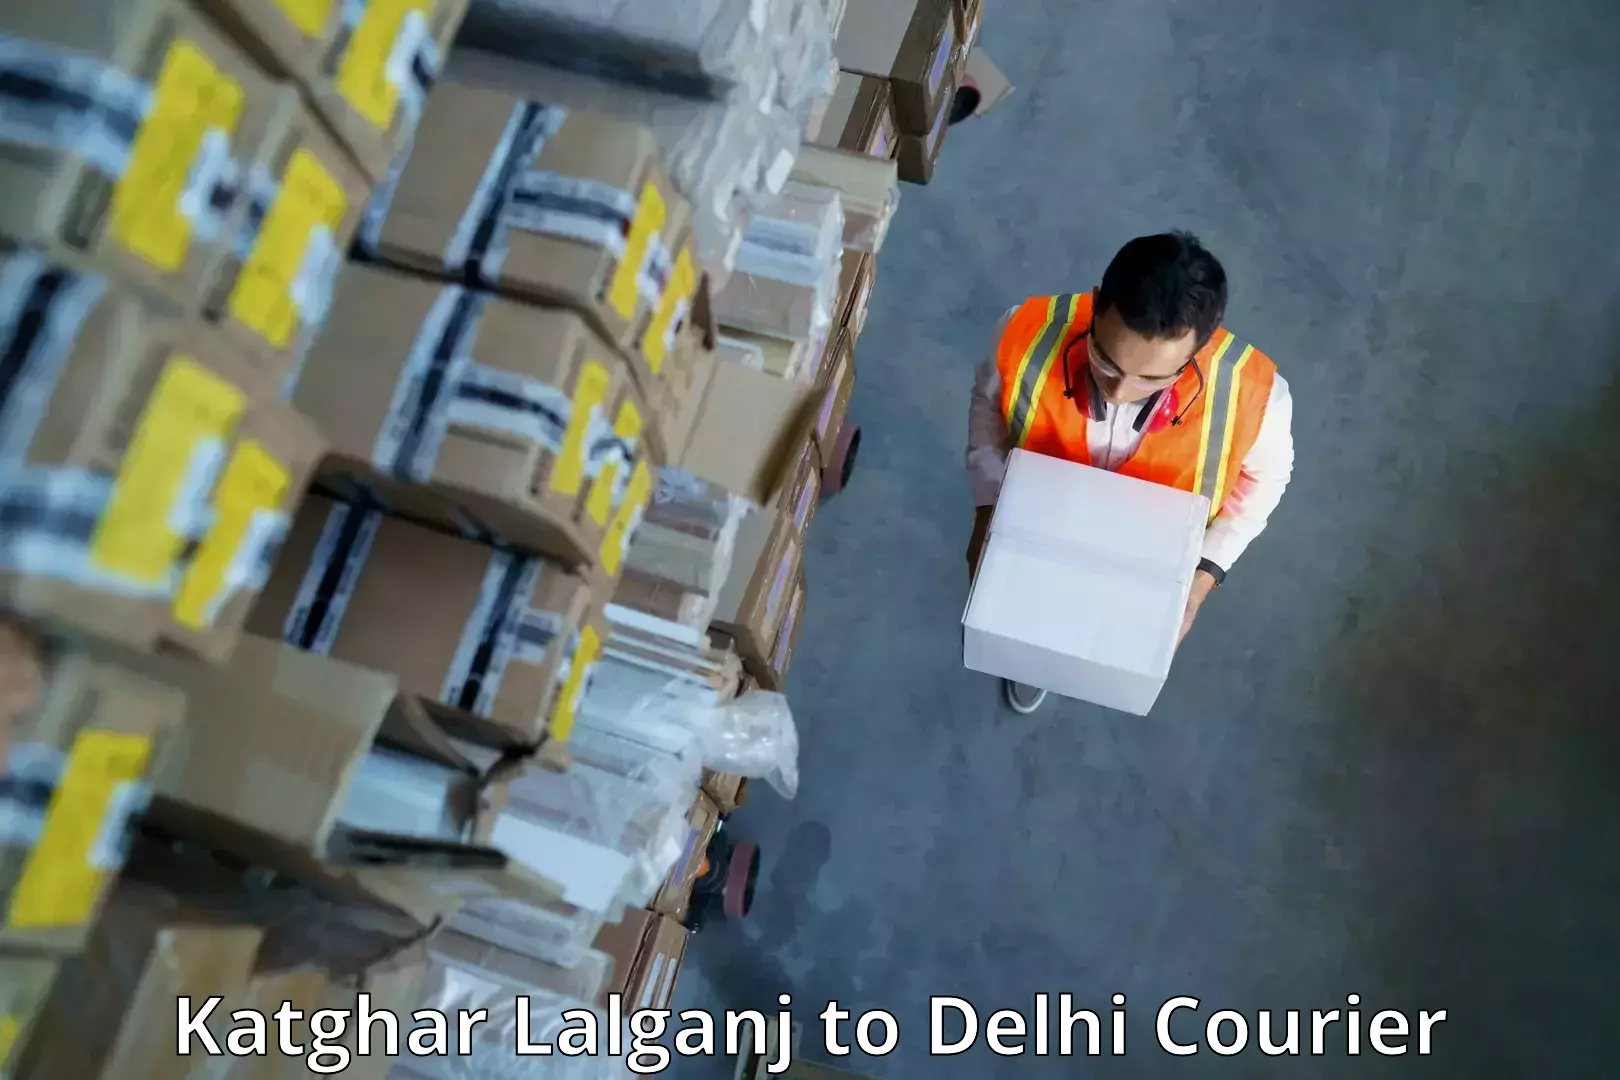 24/7 courier service Katghar Lalganj to NCR